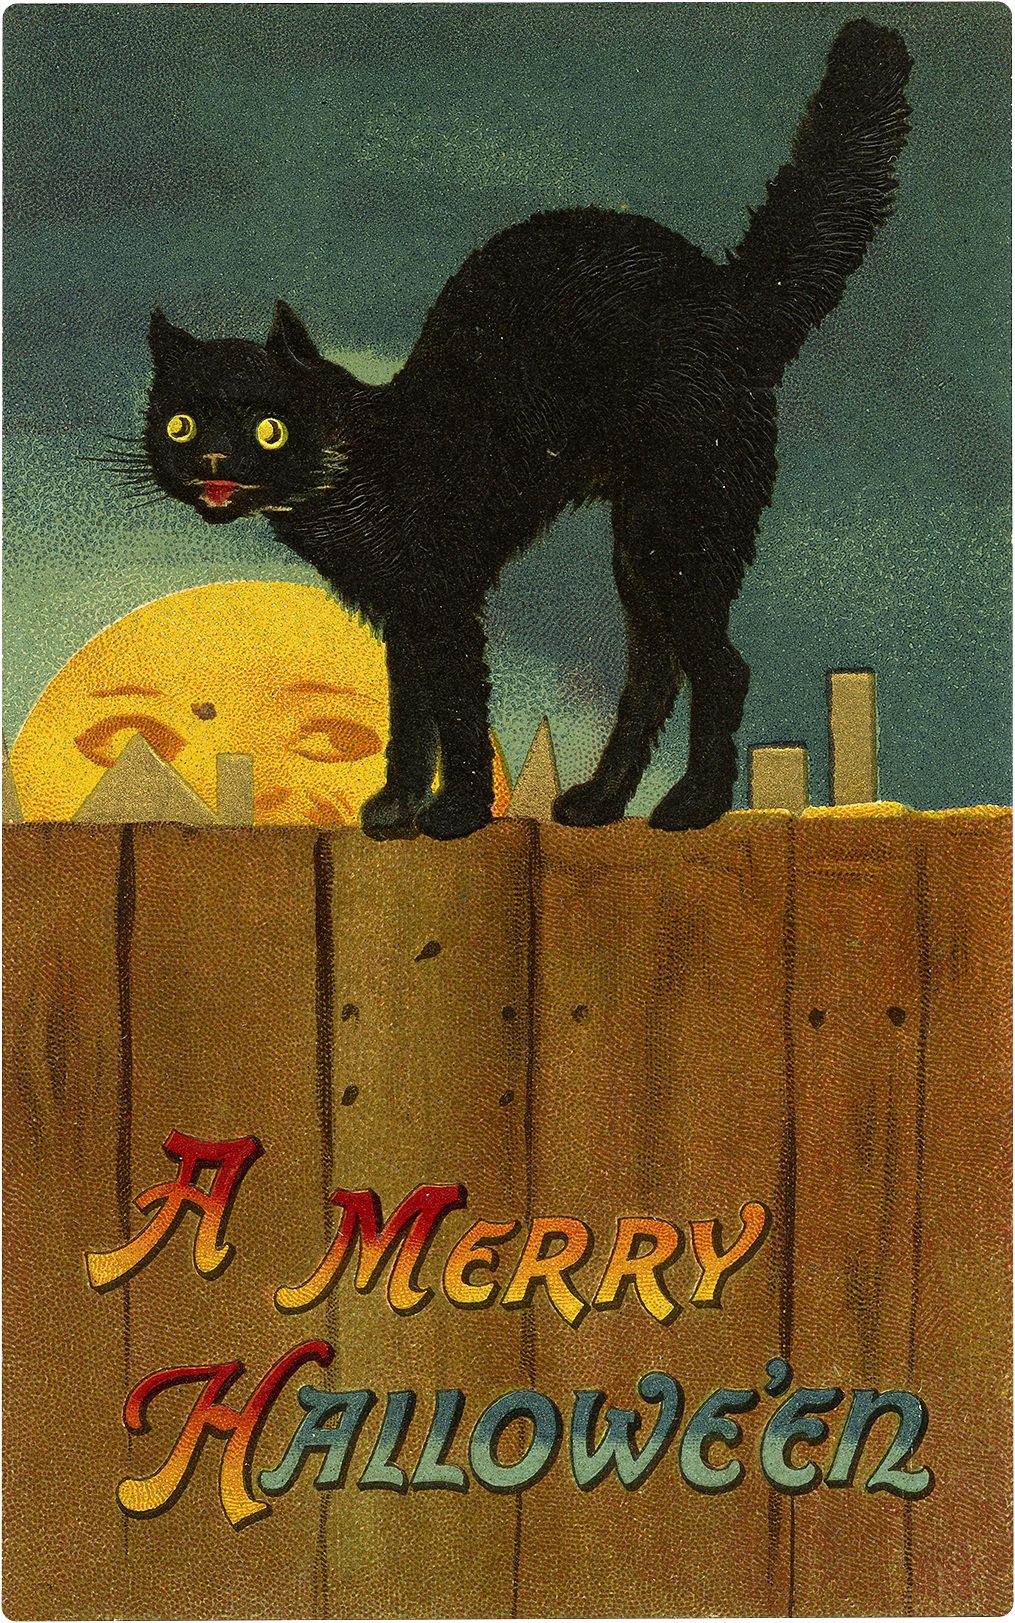 Retro Scary Black Cat on Fence Halloween Image! - The Graphics Fairy